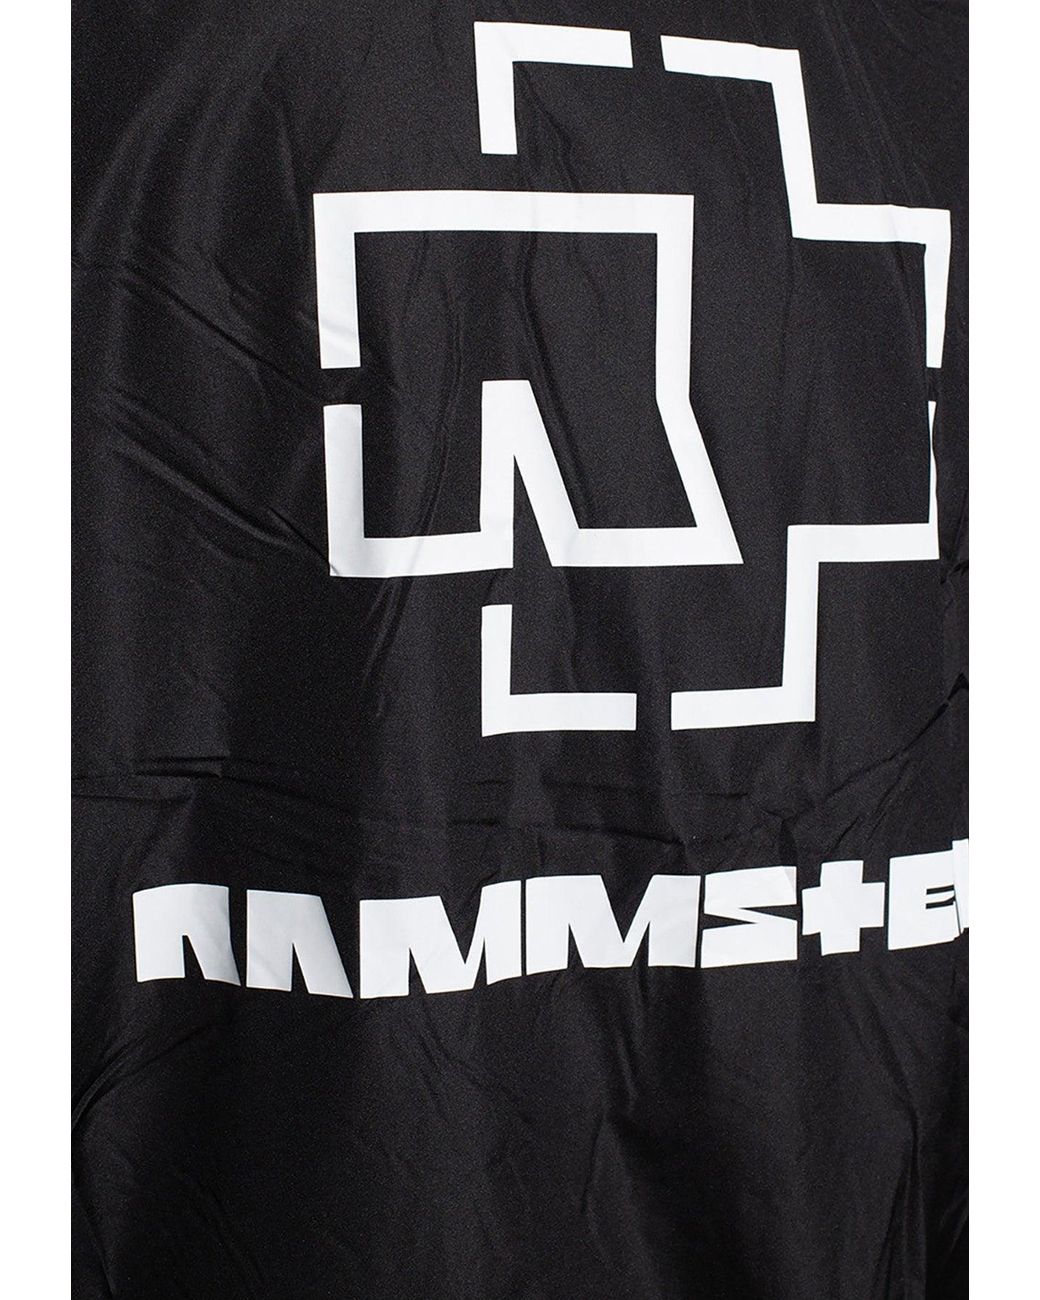 Rammstein Flagge